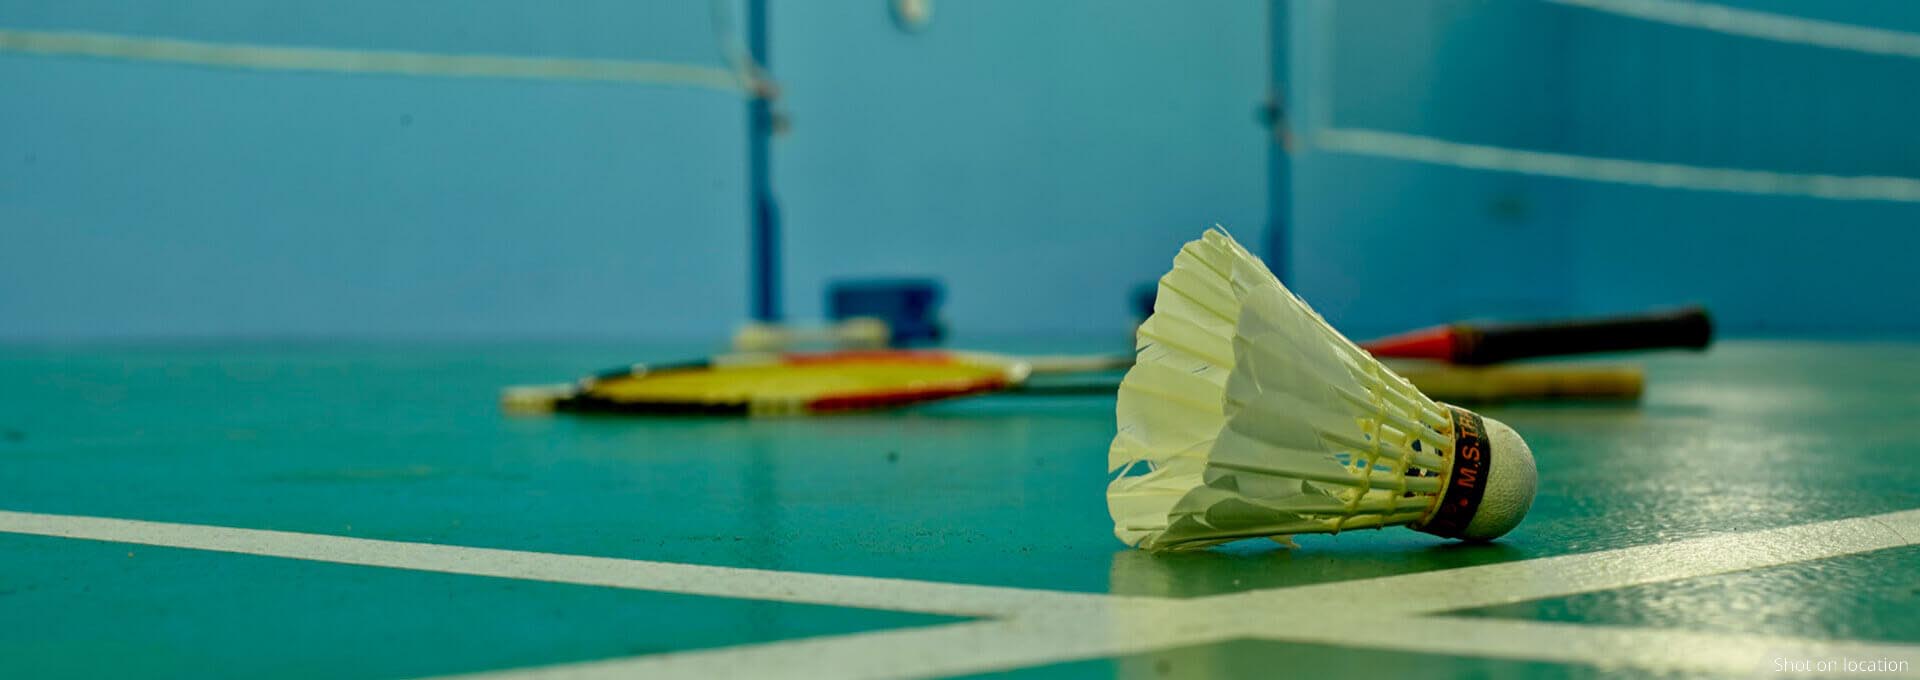 tiana omr badminton